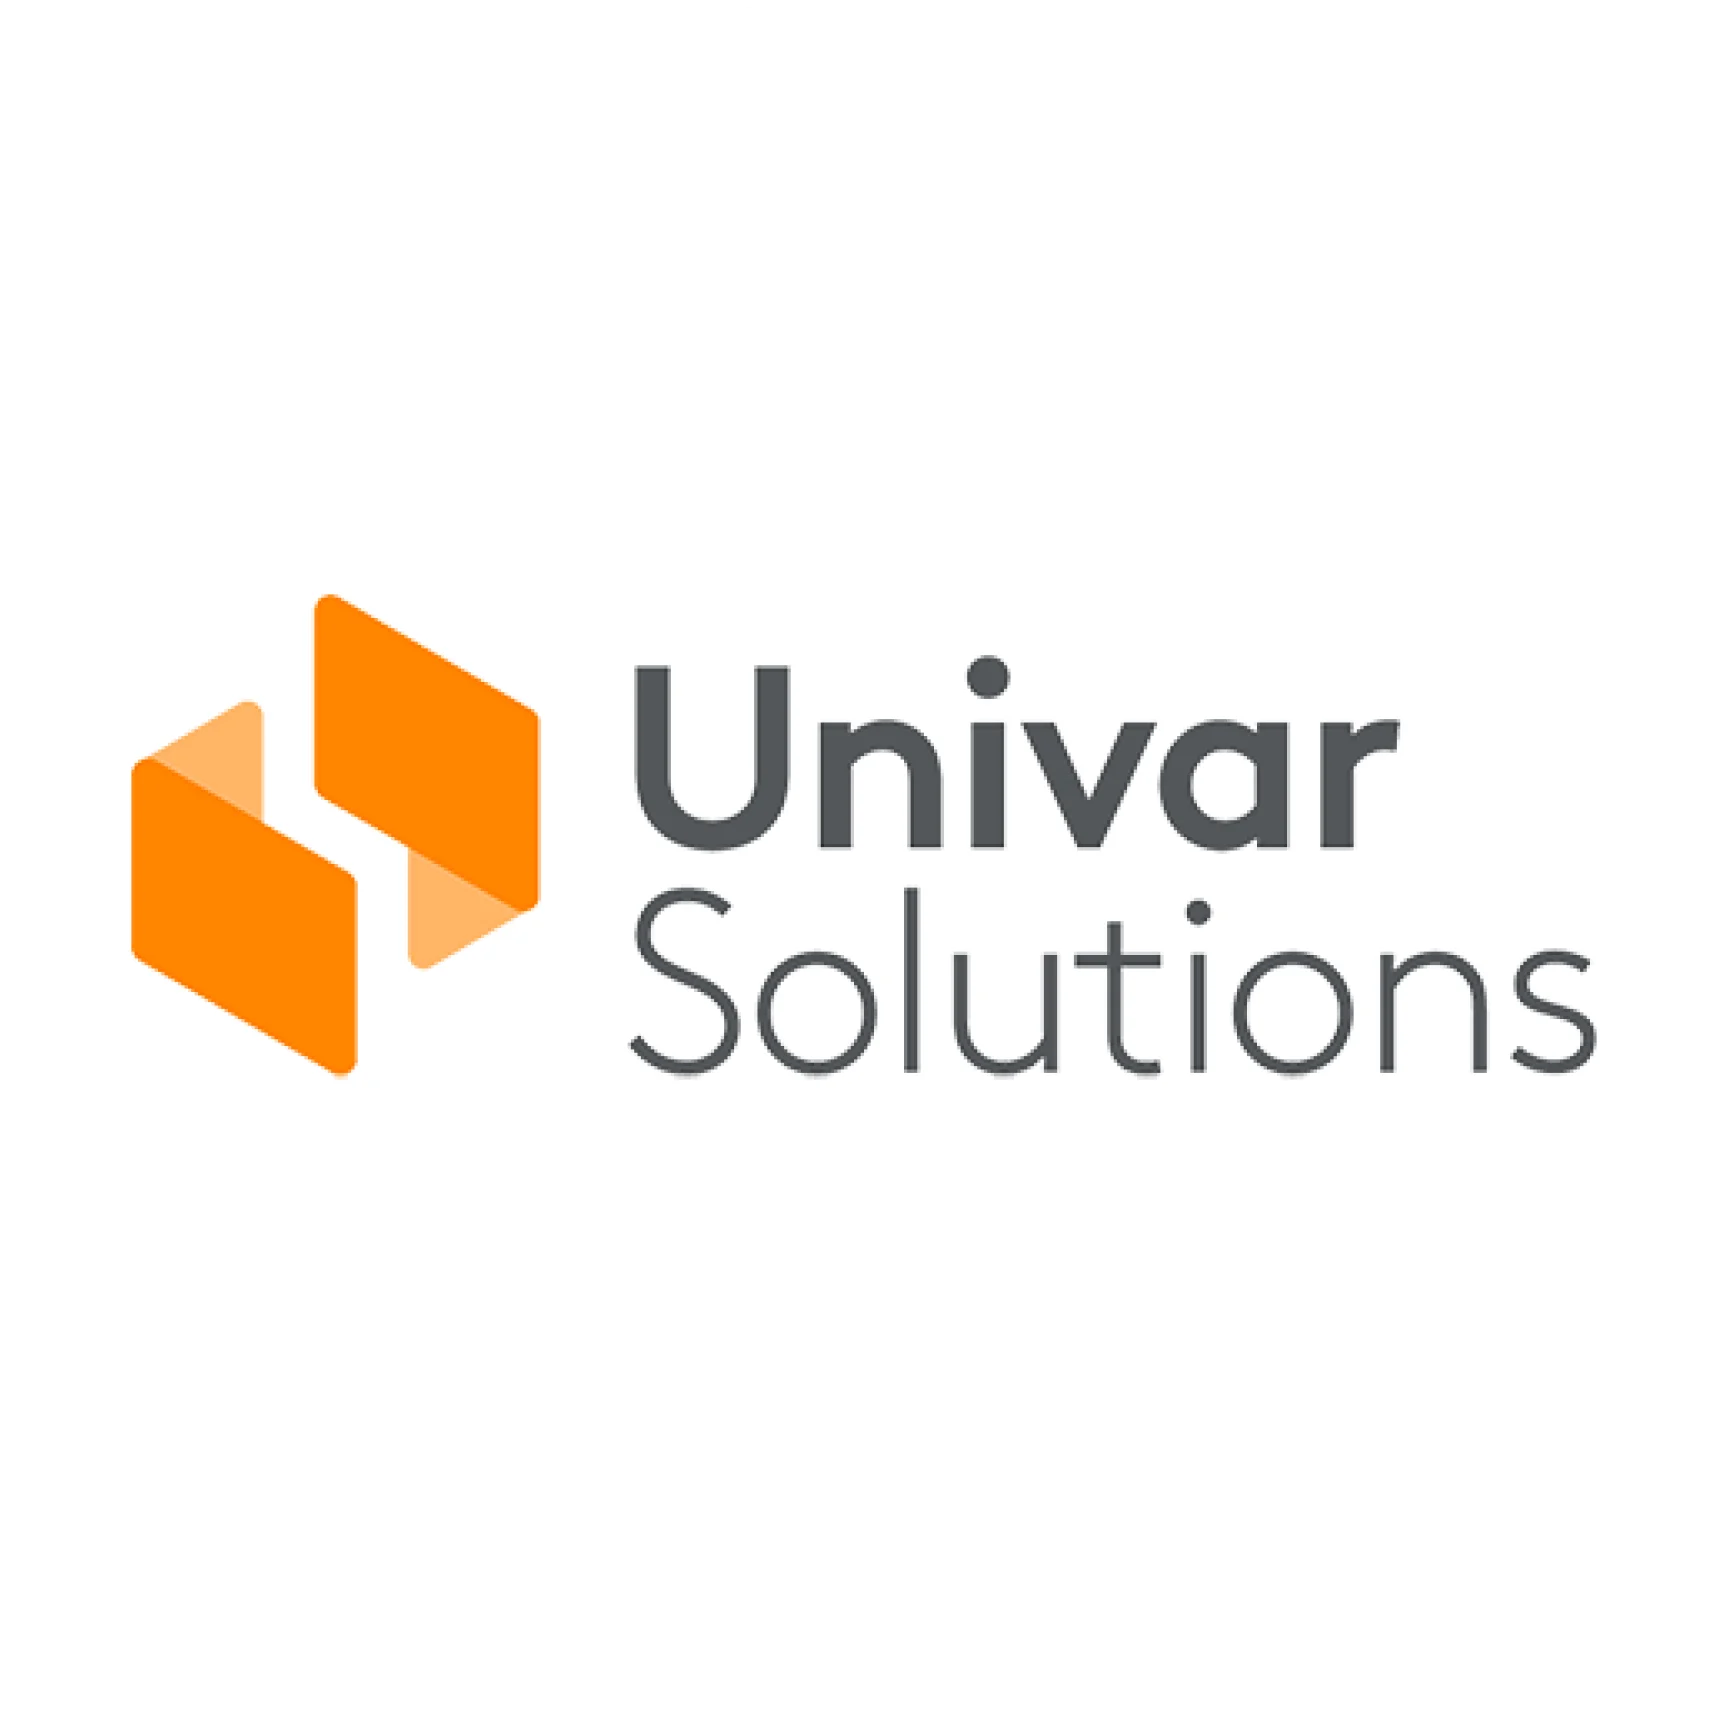 Univar Solutions